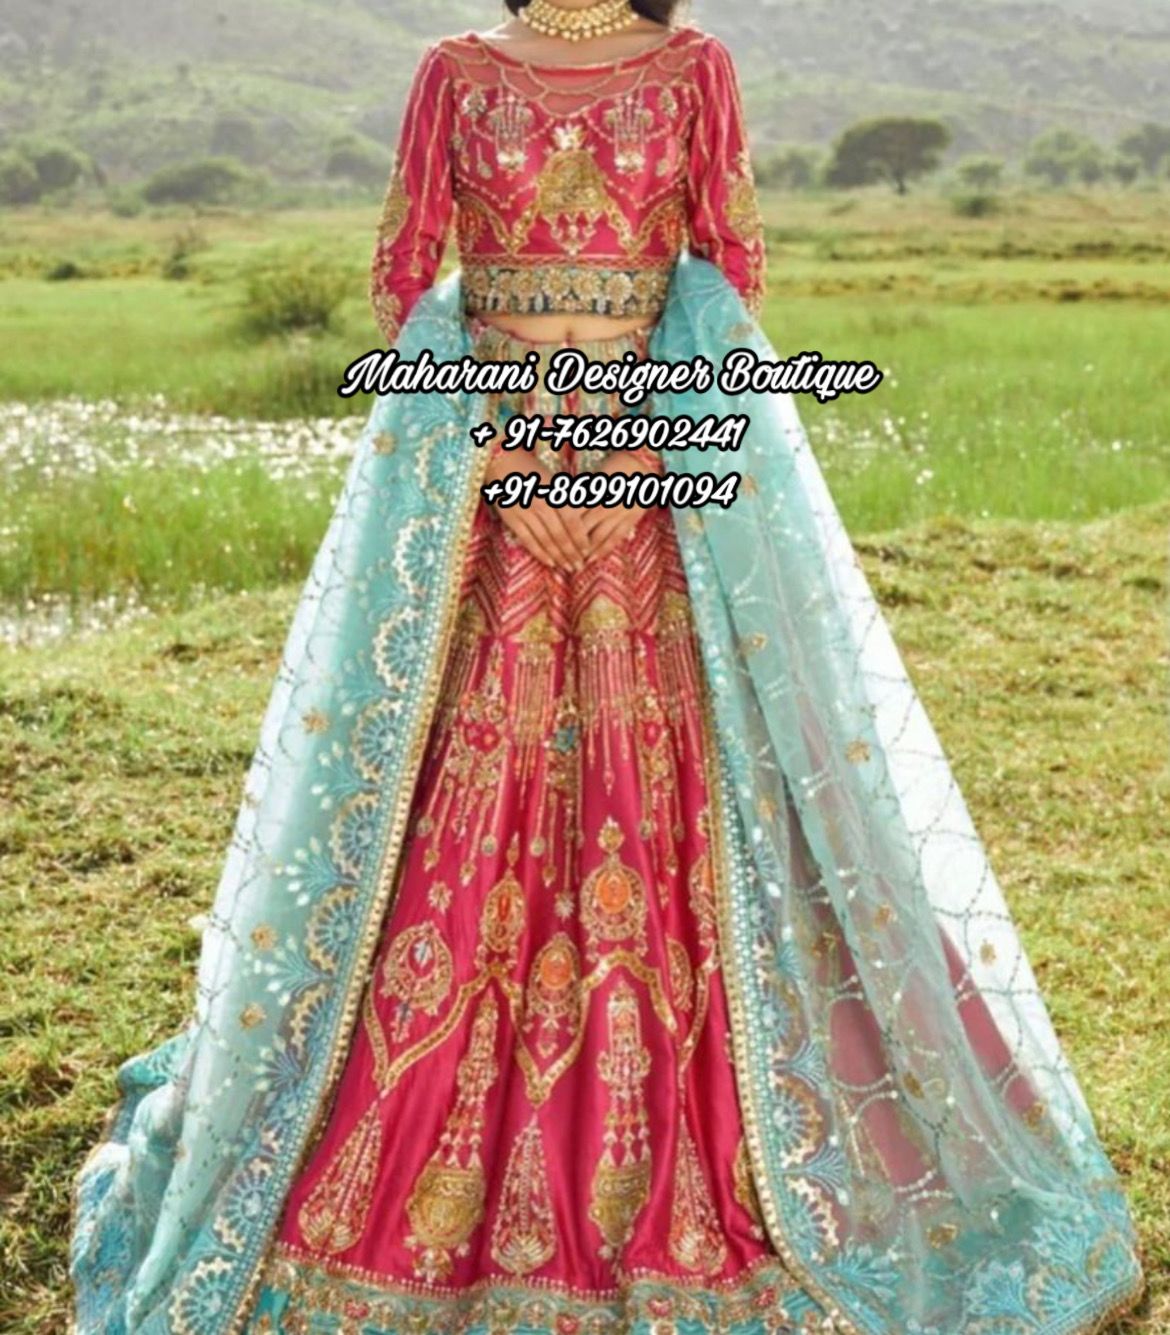 Latest Design Wedding Lehenga | Maharani Designer Boutique